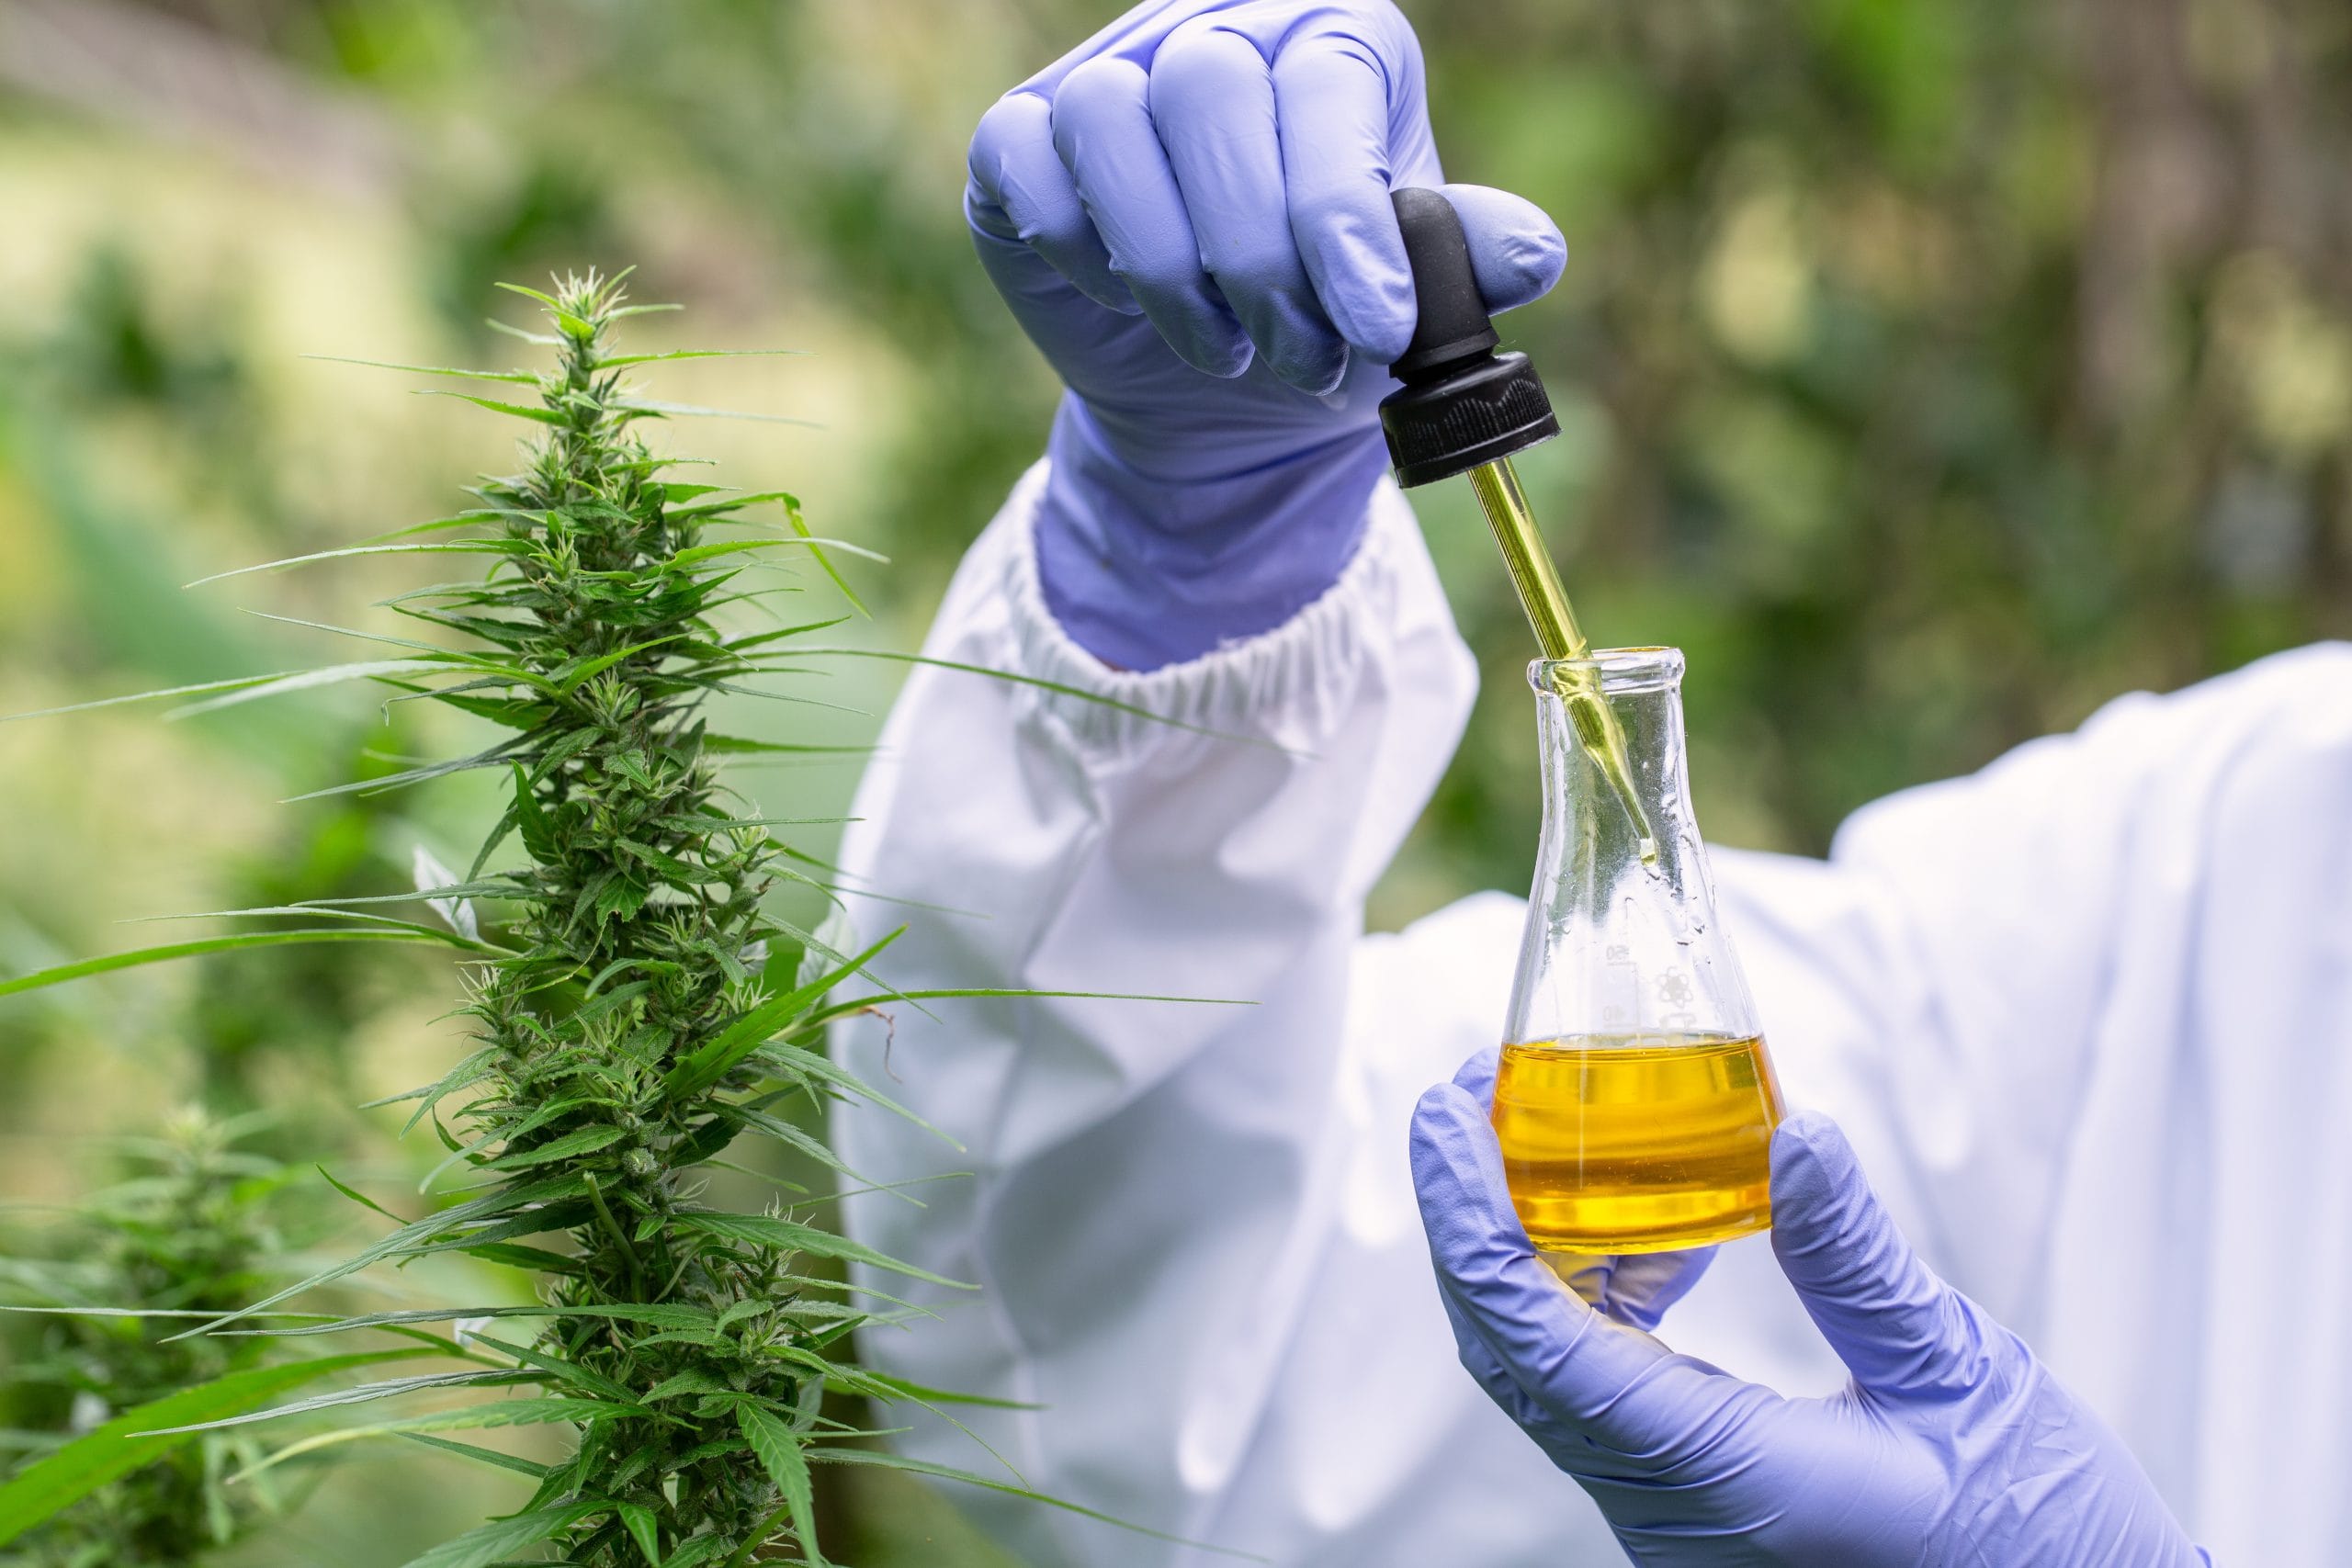 COVID: A scientist testing hemp and CBD oil